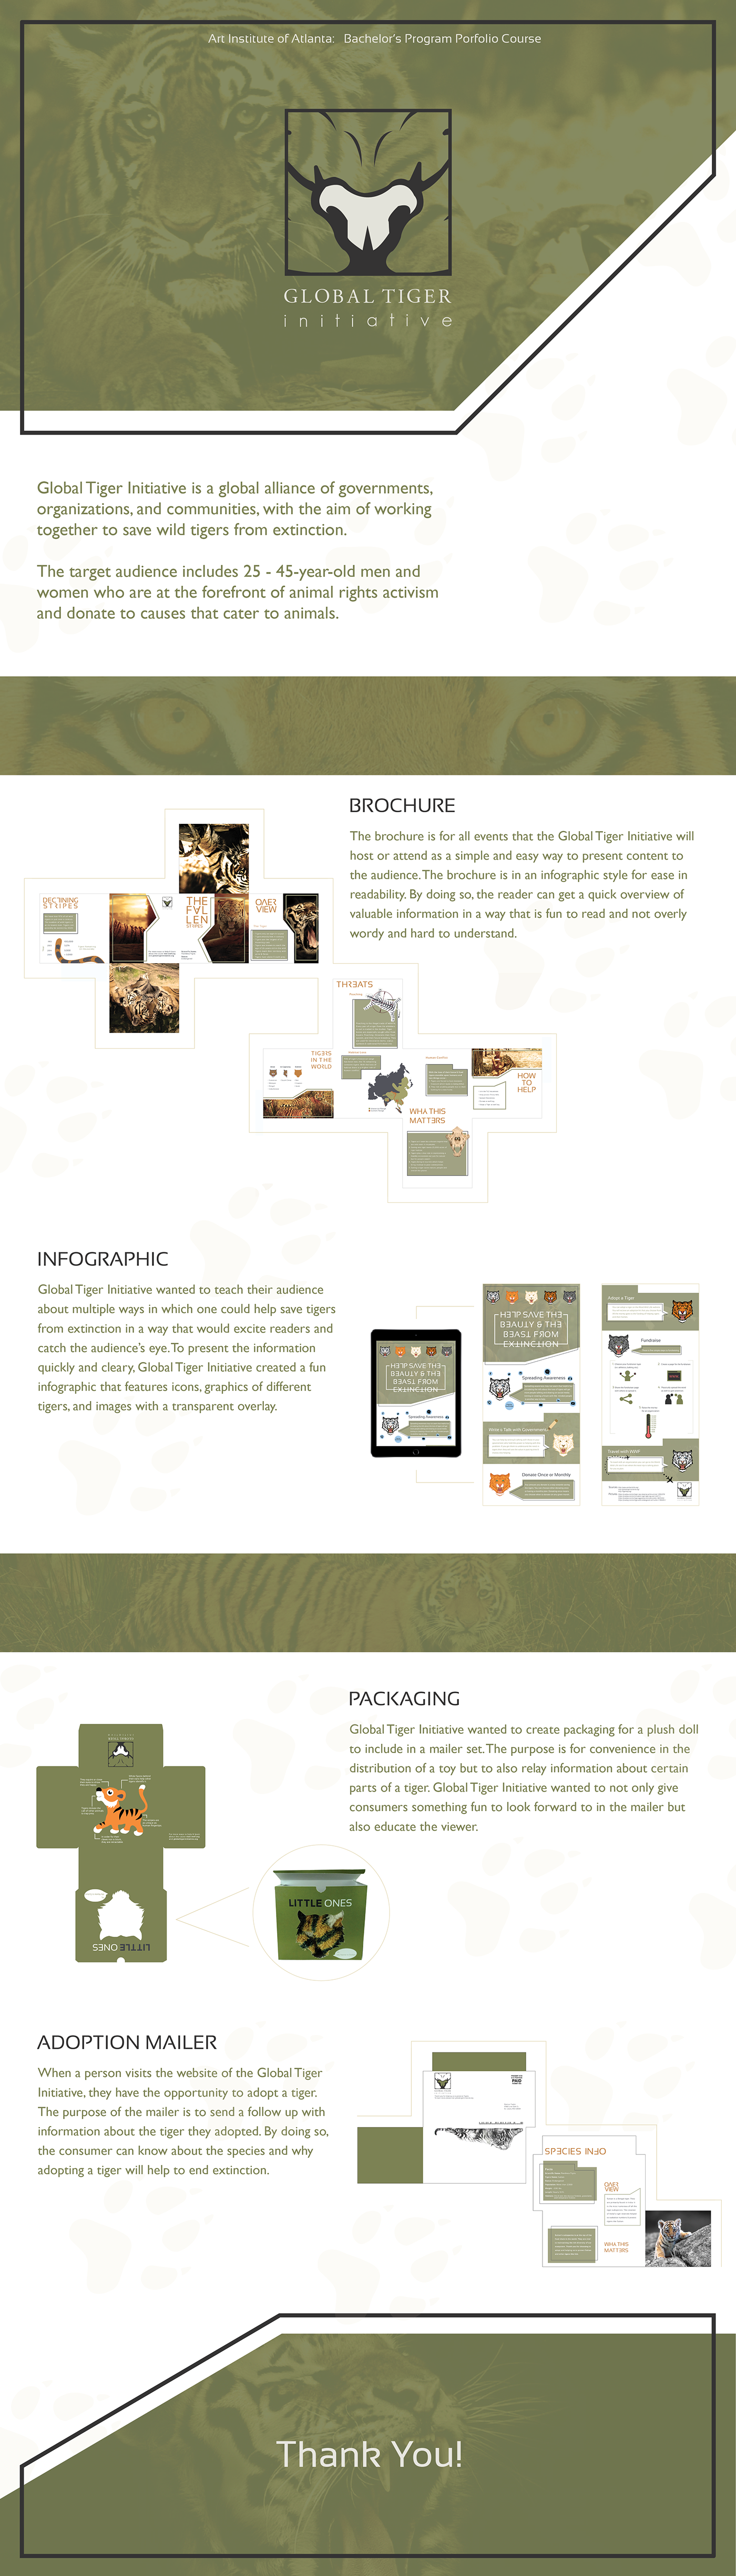 Packaging infograpgic brochure mailer